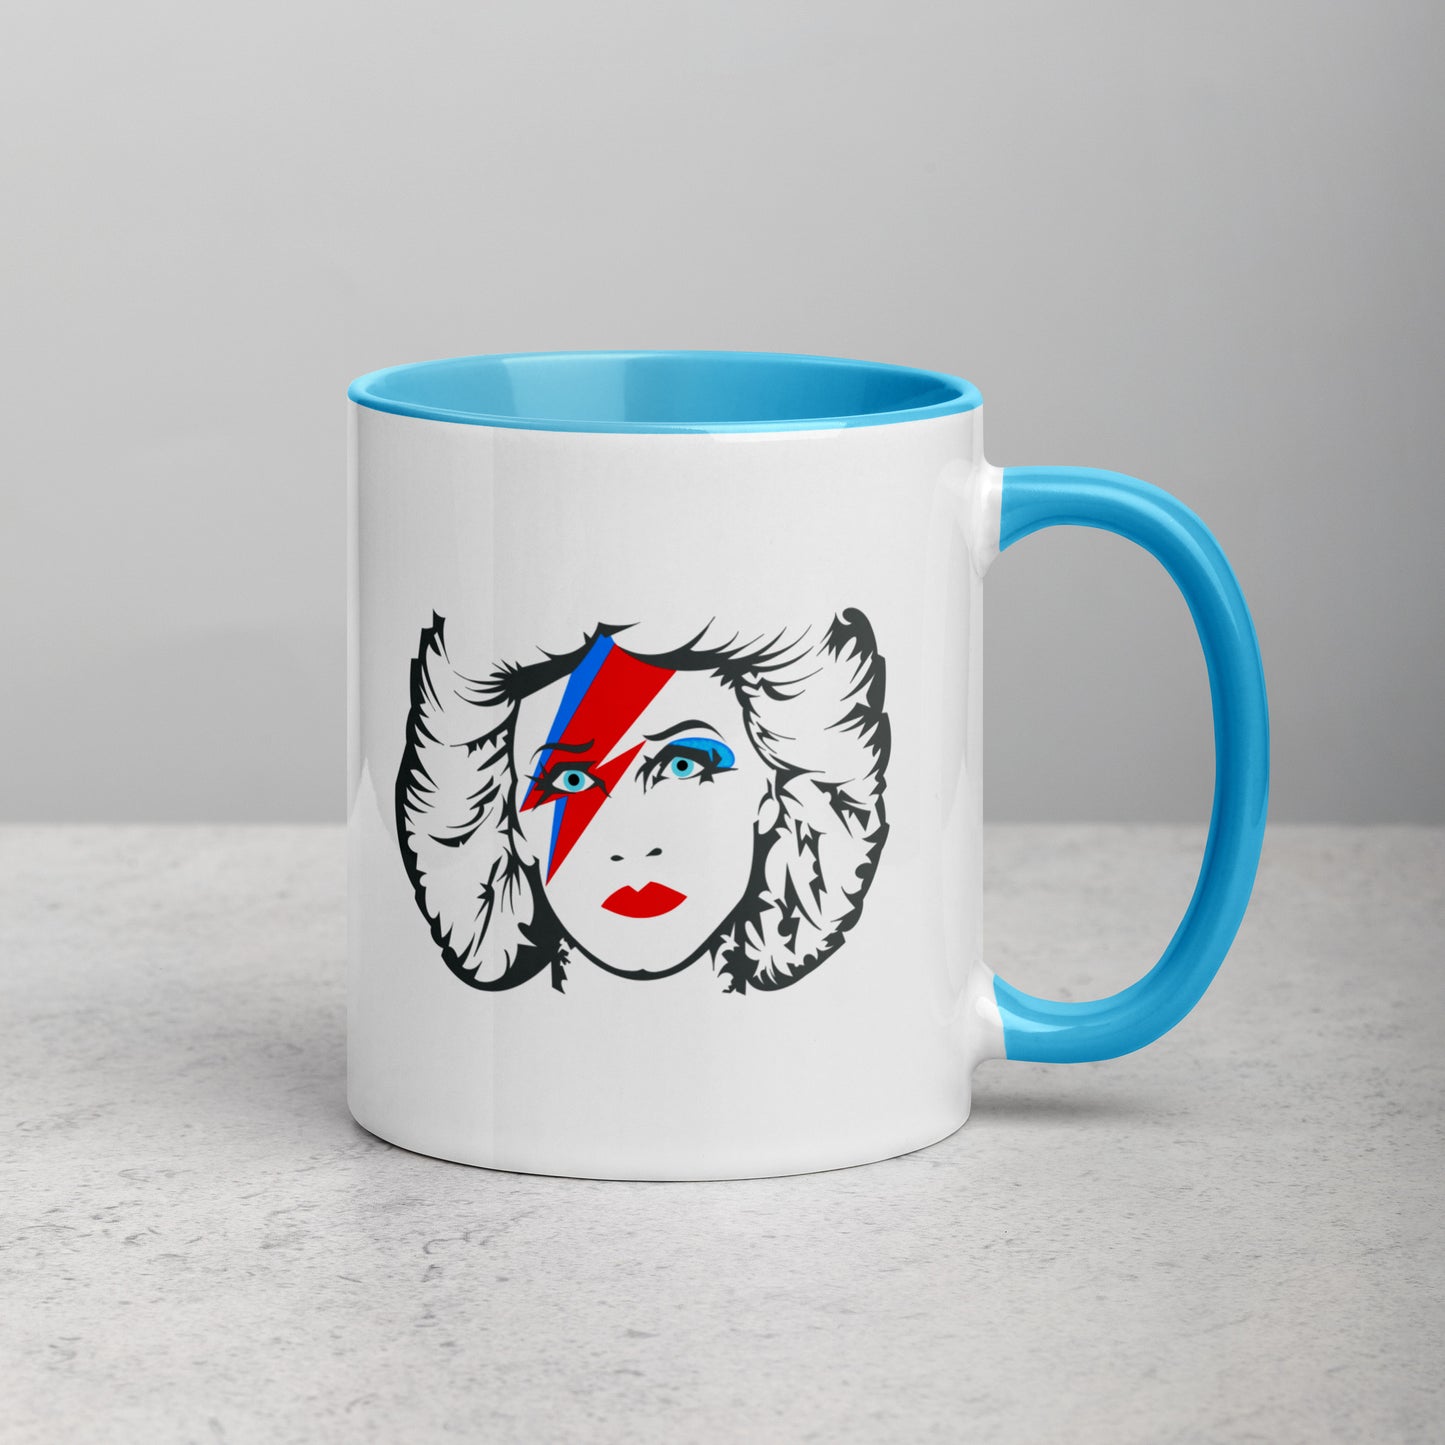 Hedwig Moonage Daydream mug with color inside